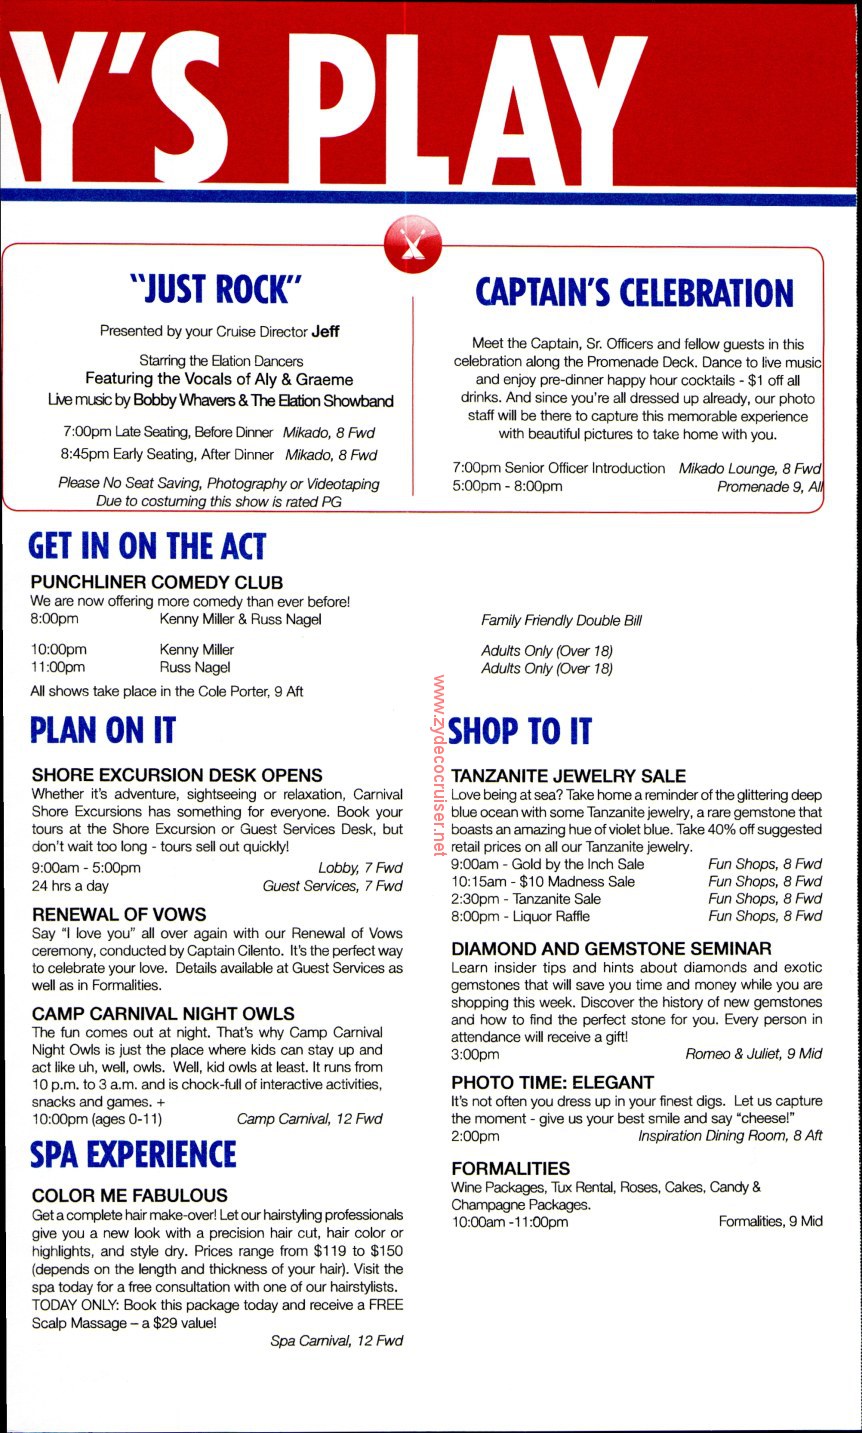 009: Carnival Elation 5 Day Fun Times, Feb 5, 2013, Page 3, 